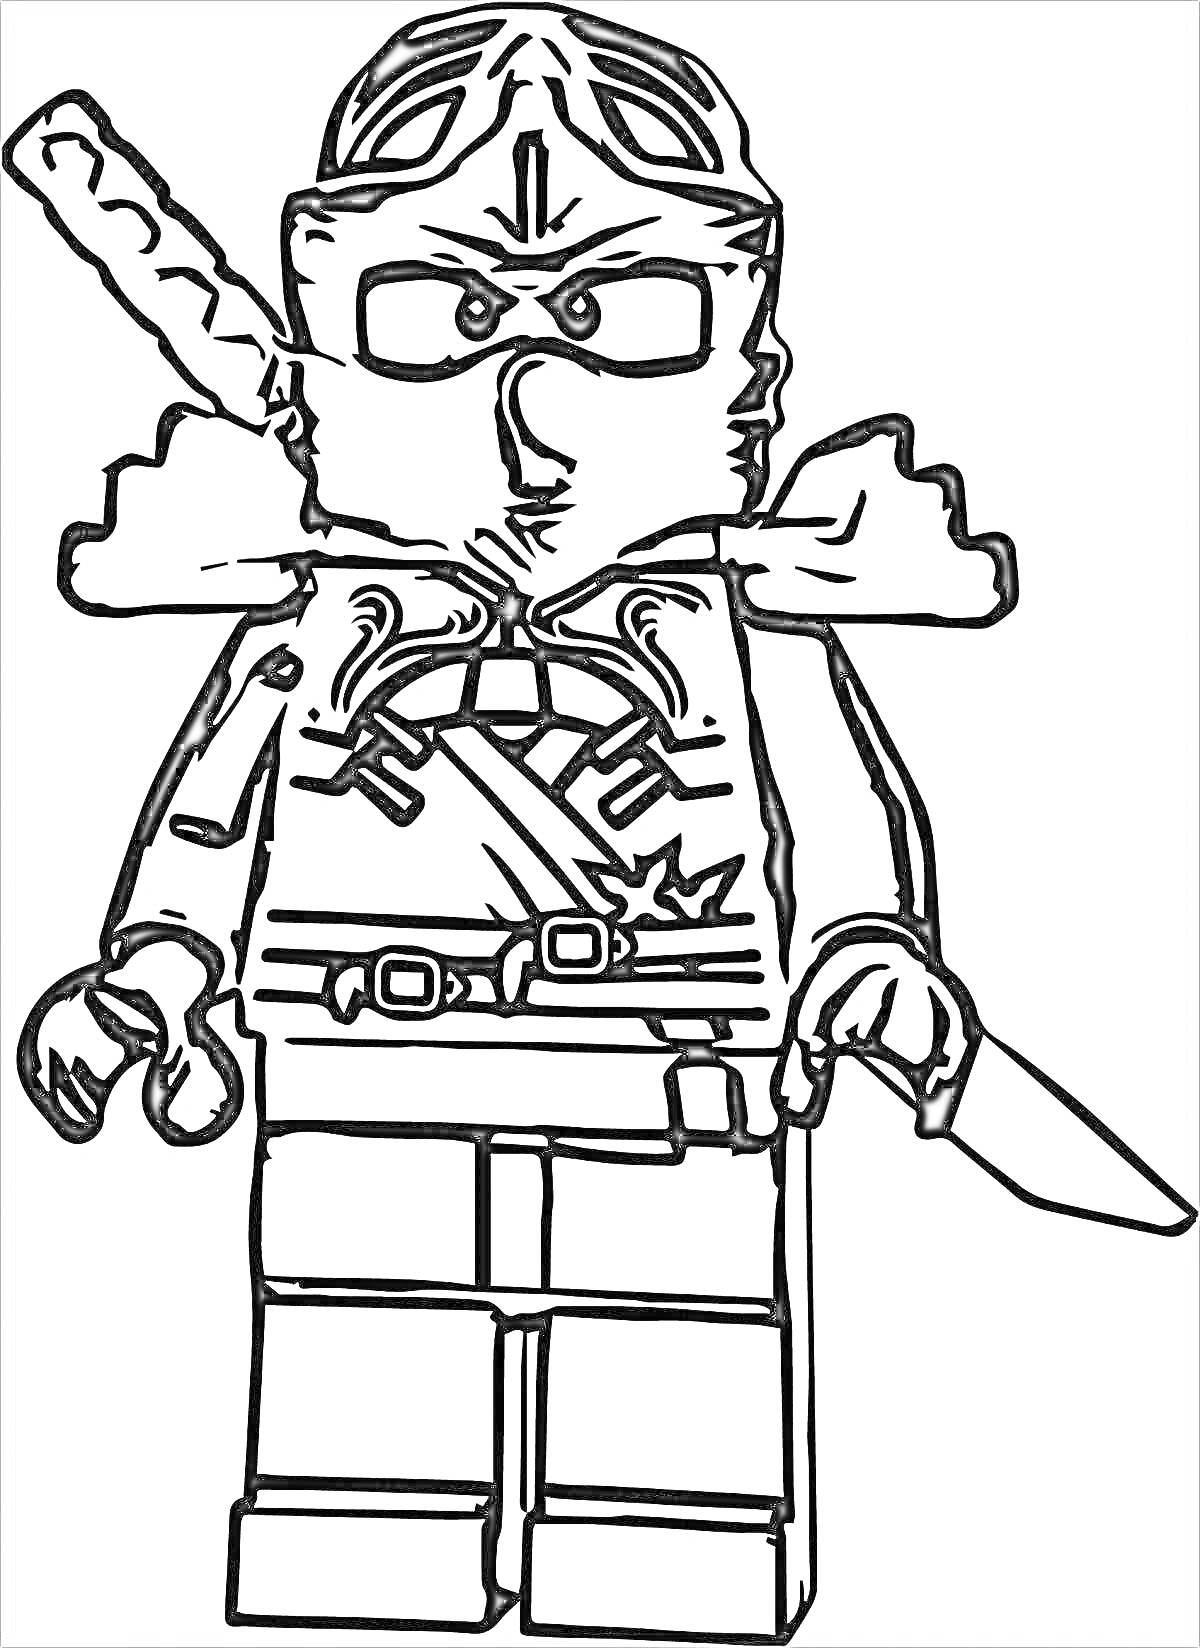 Раскраска Ллойд из Ниндзяго с мечом и ножом на поясе в маске